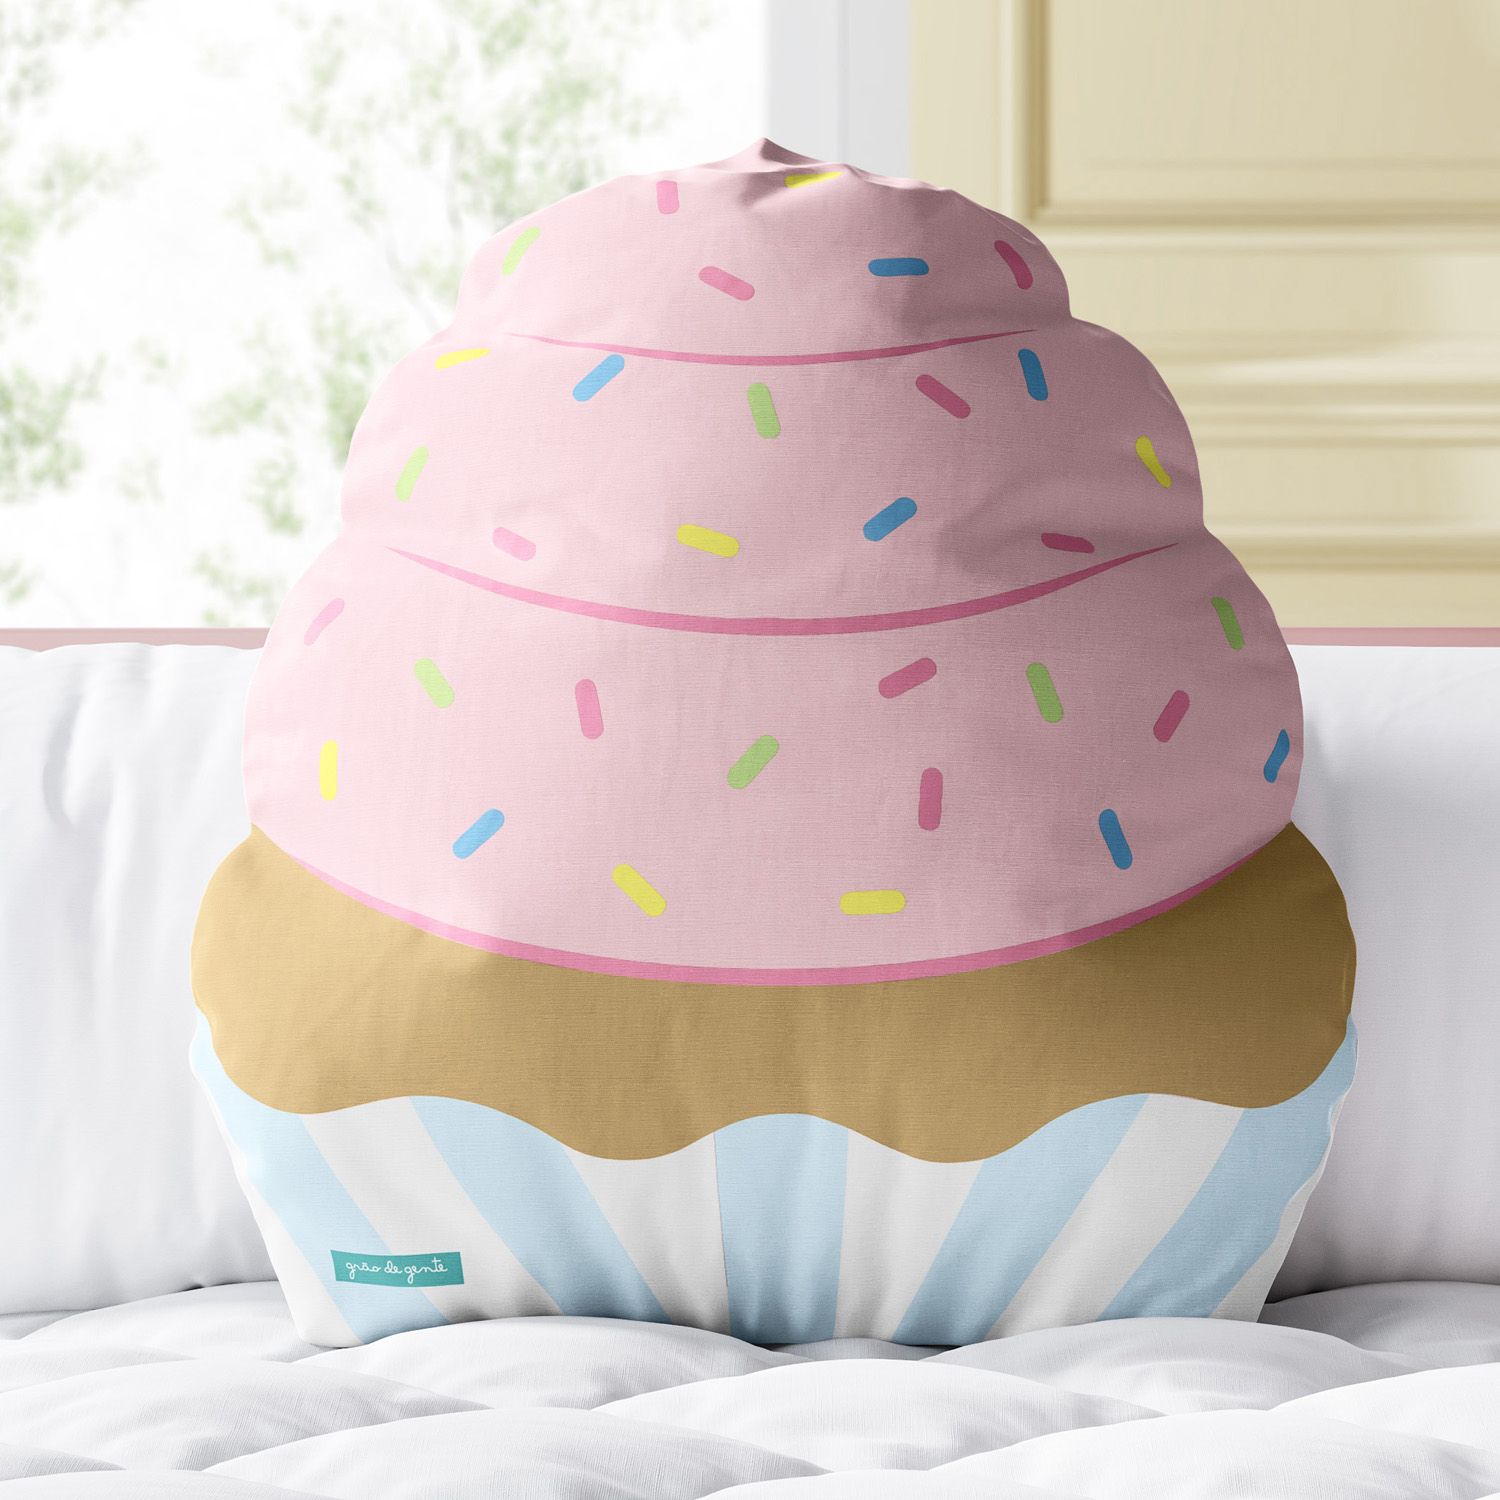 Almofada Cupcake Doce Sonho 33cm